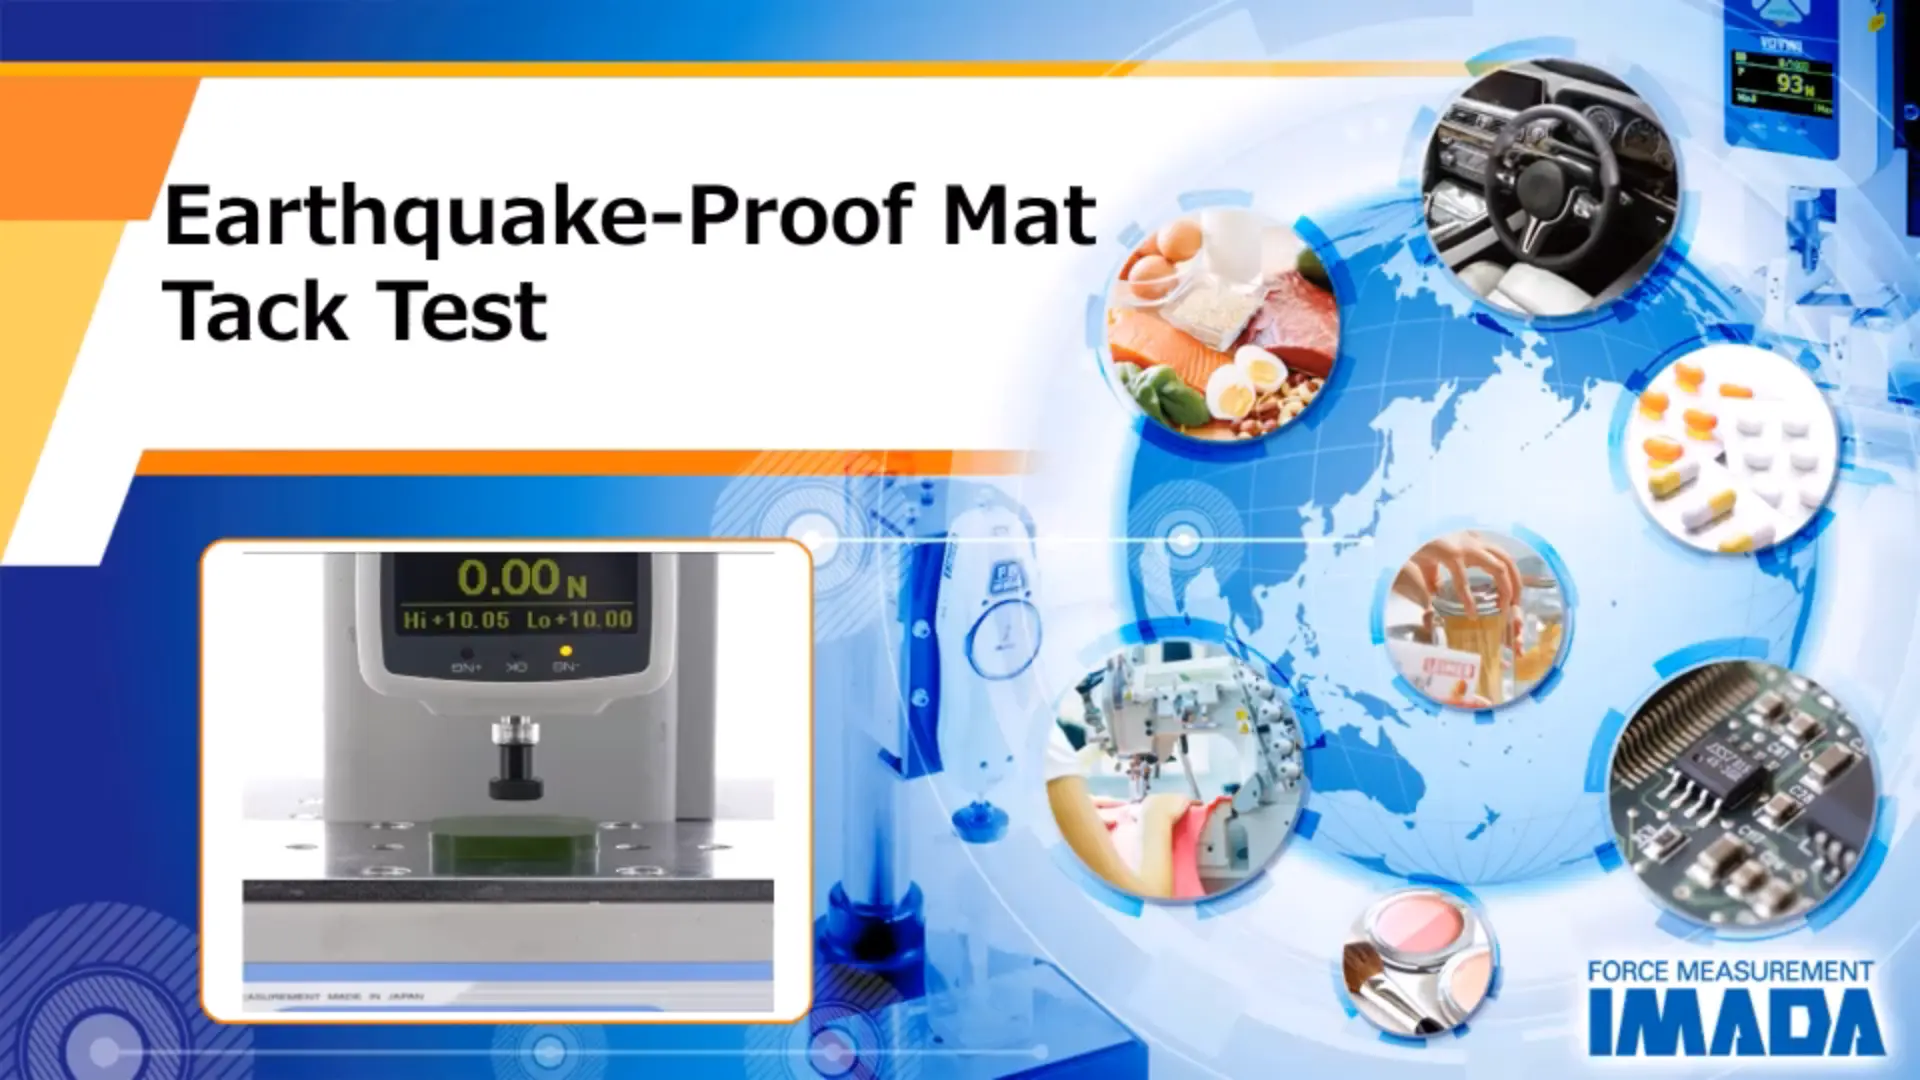 Earthquake-Proof Mat Tack Test